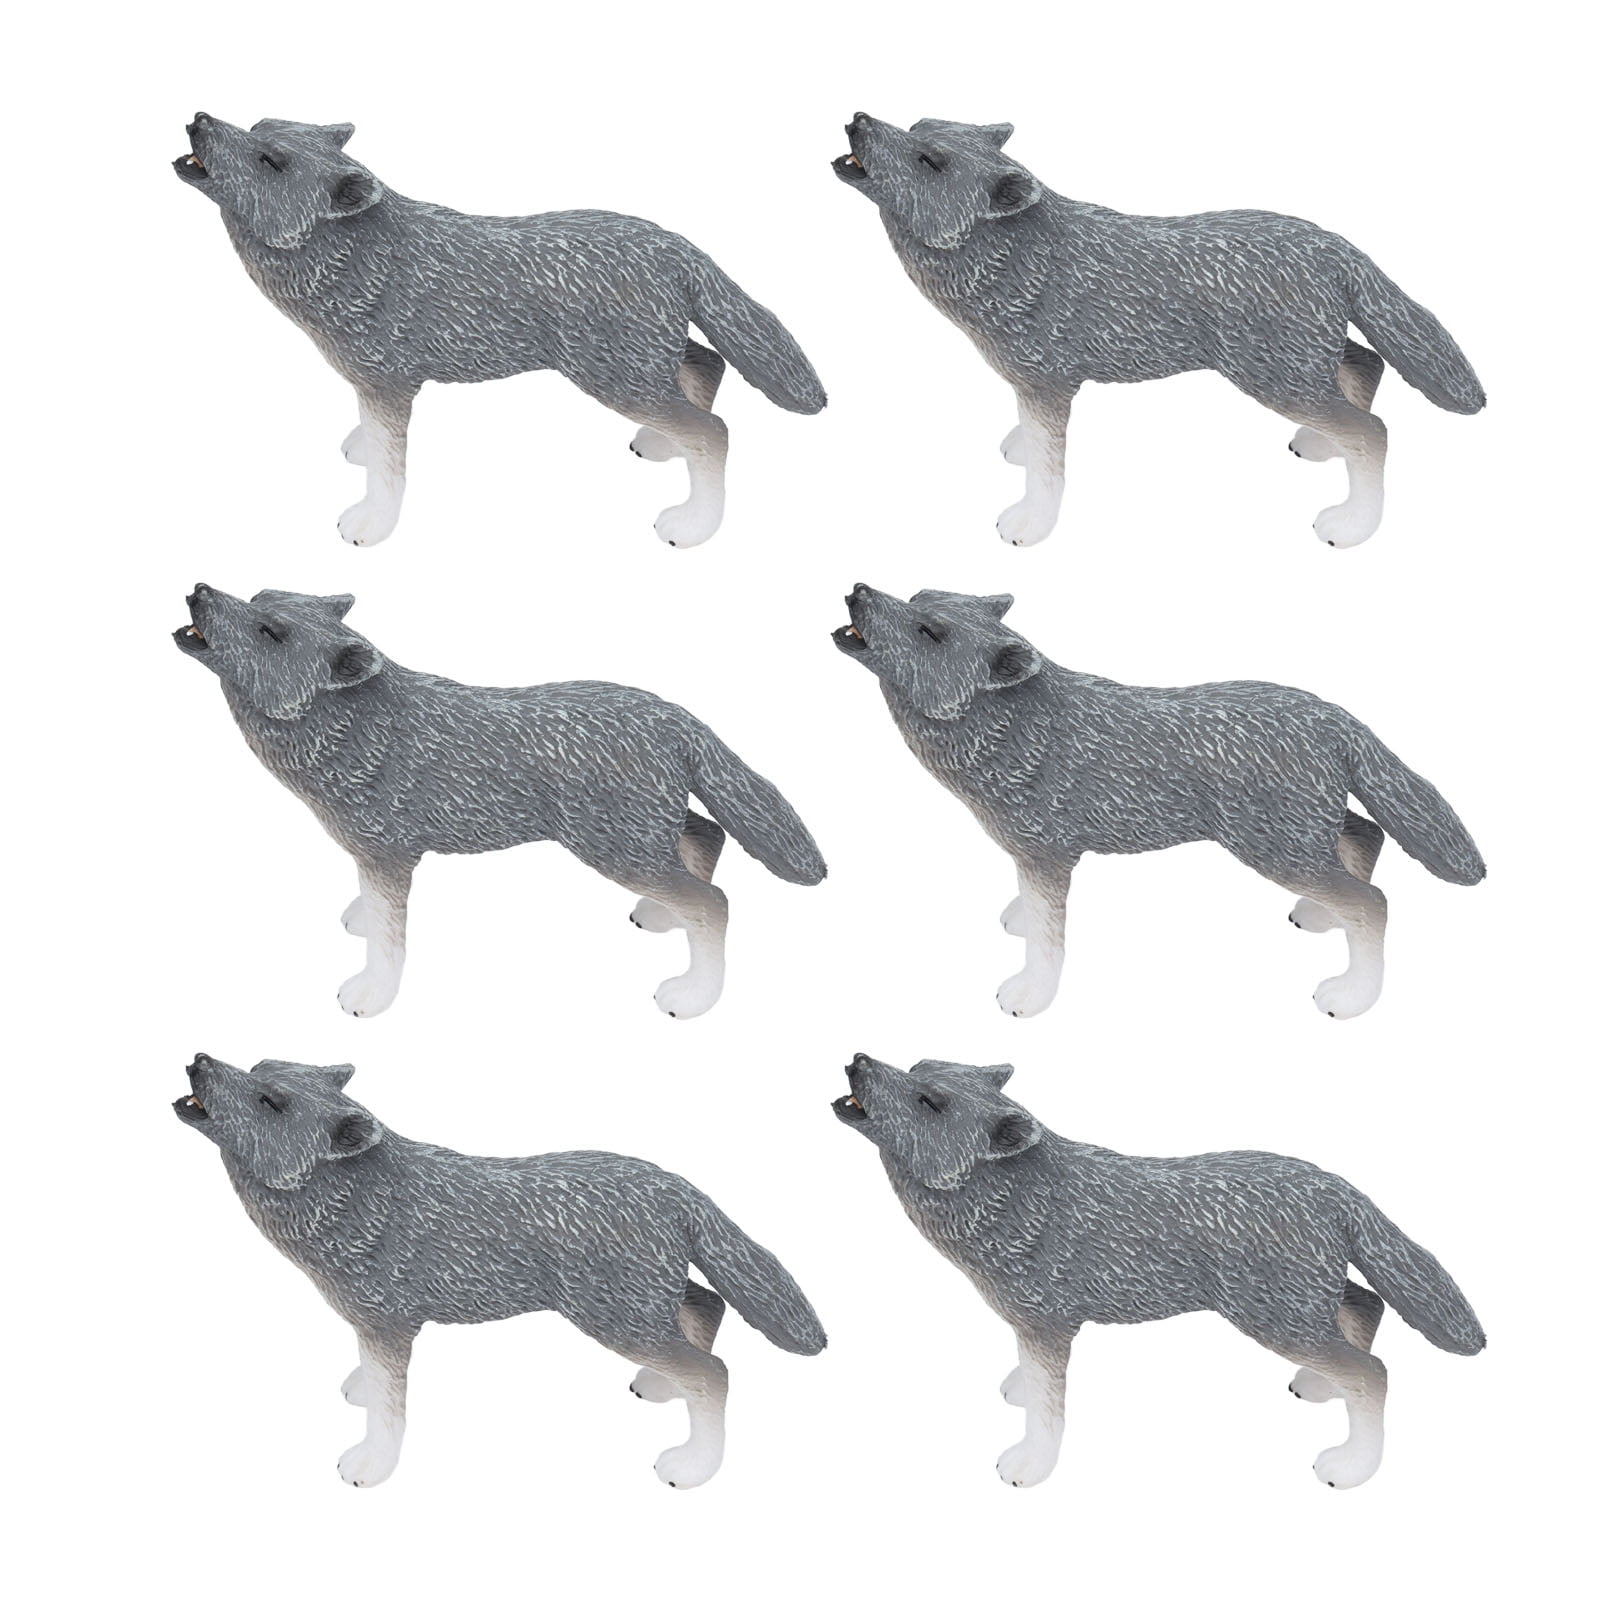 Ccdes Arctic Wolf Animal Model,6pcs Wolf Figurine Toys Lifelike